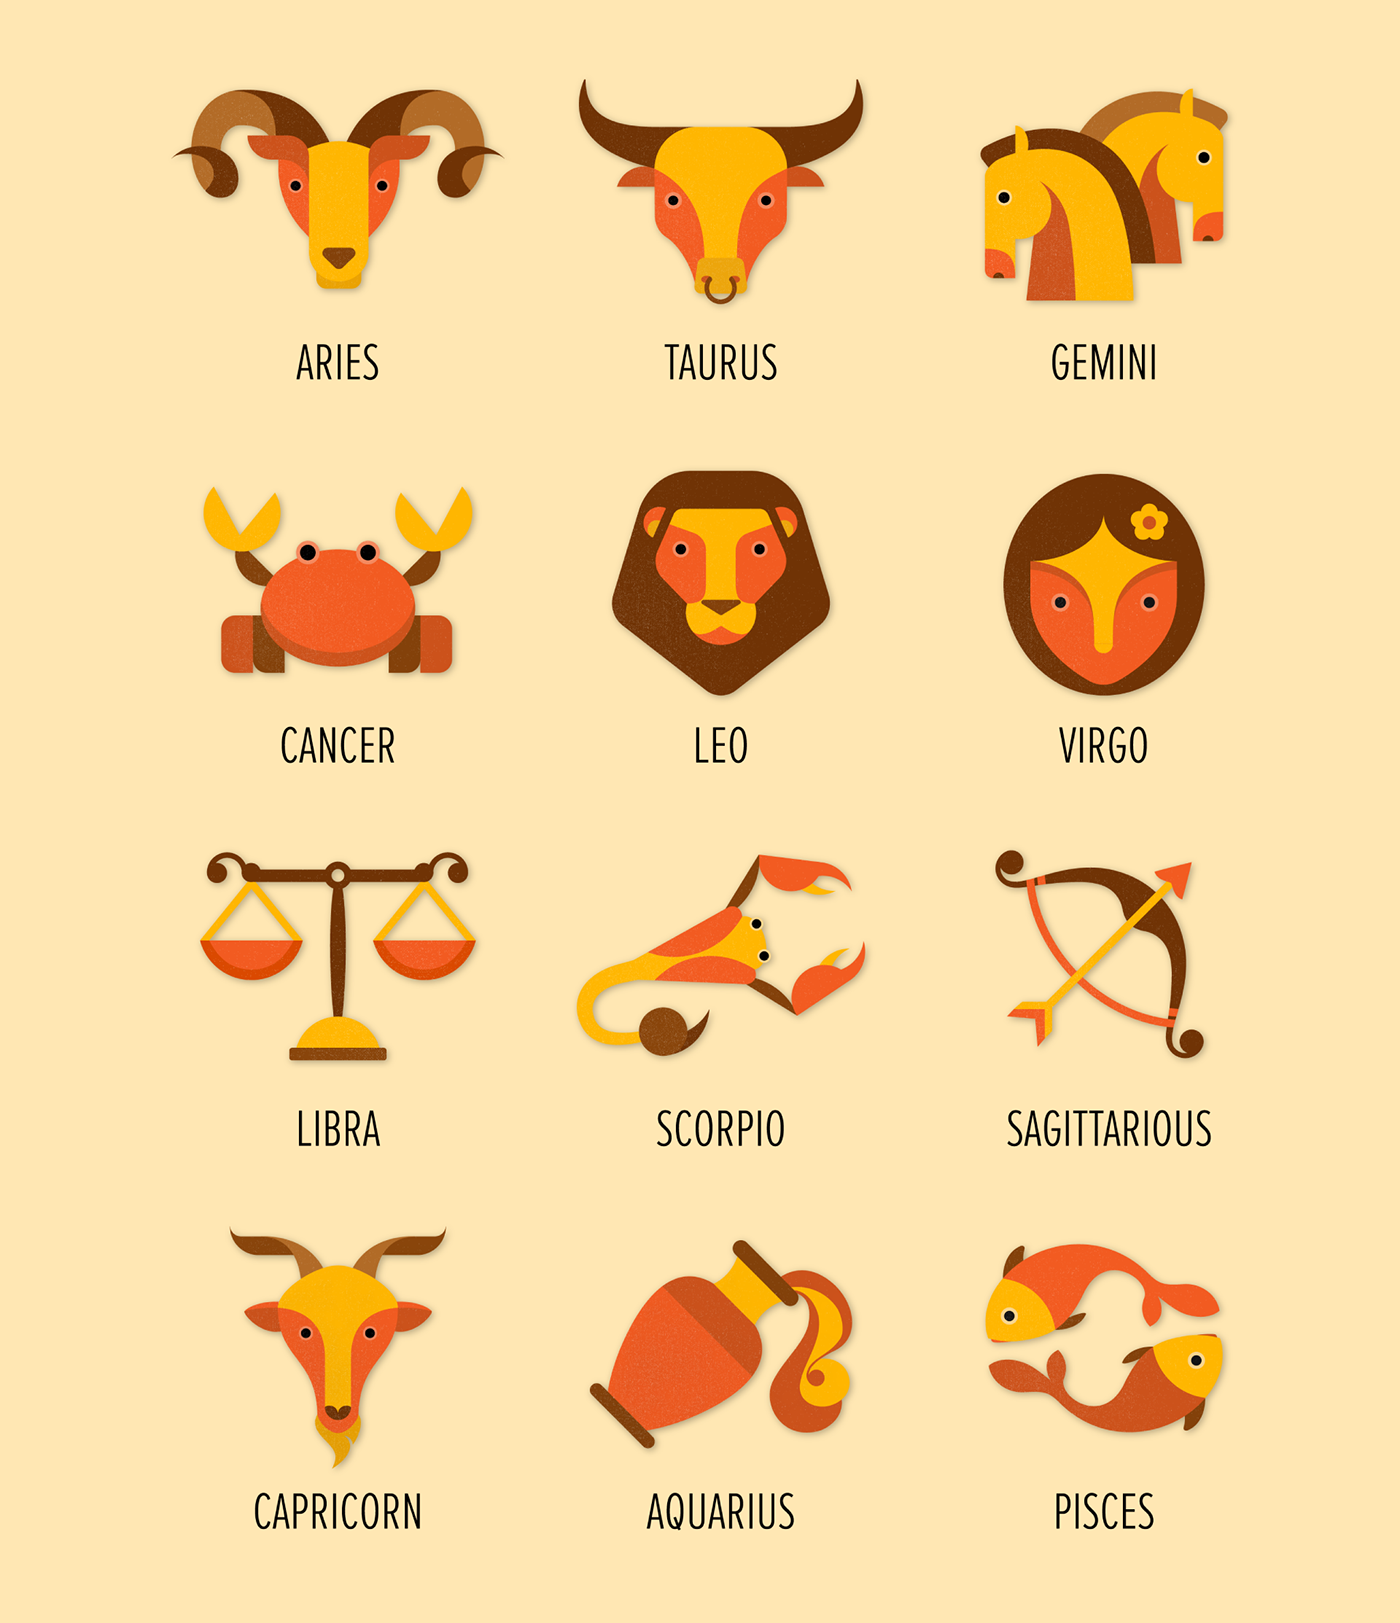 Horoscope zodiac signs icon design  ILLUSTRATION  Astrology stars UI/UX icons daily illustrations